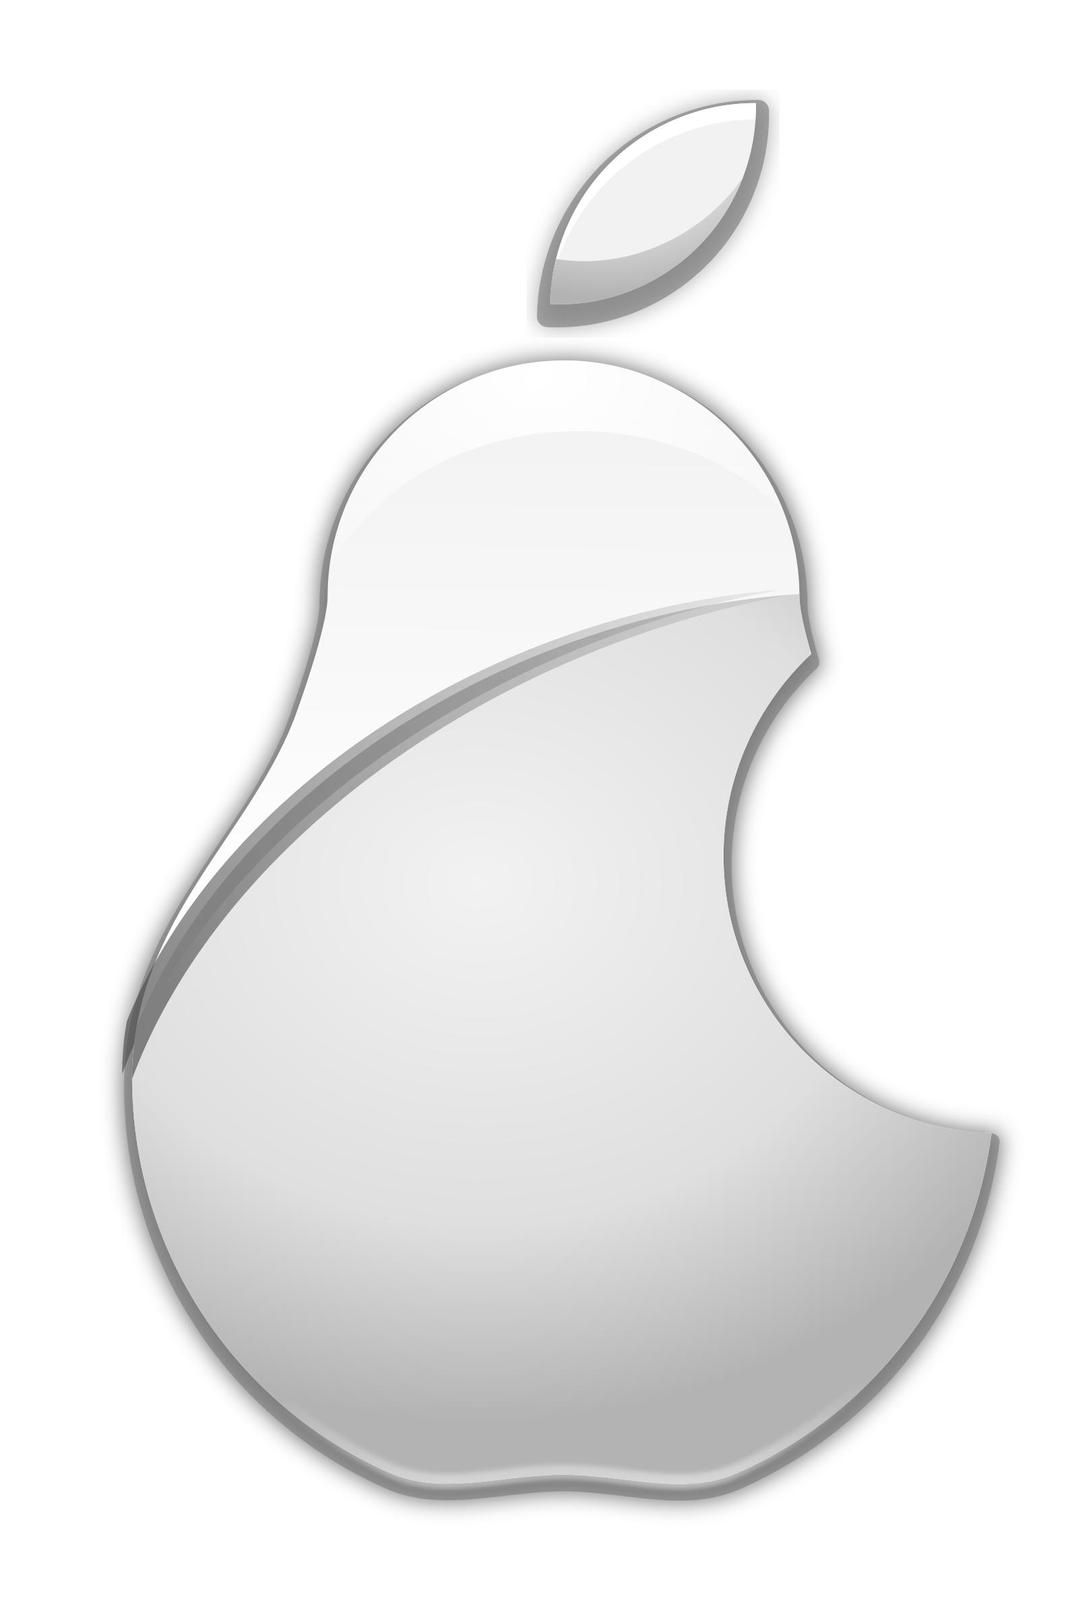 Pear Logo png transparent